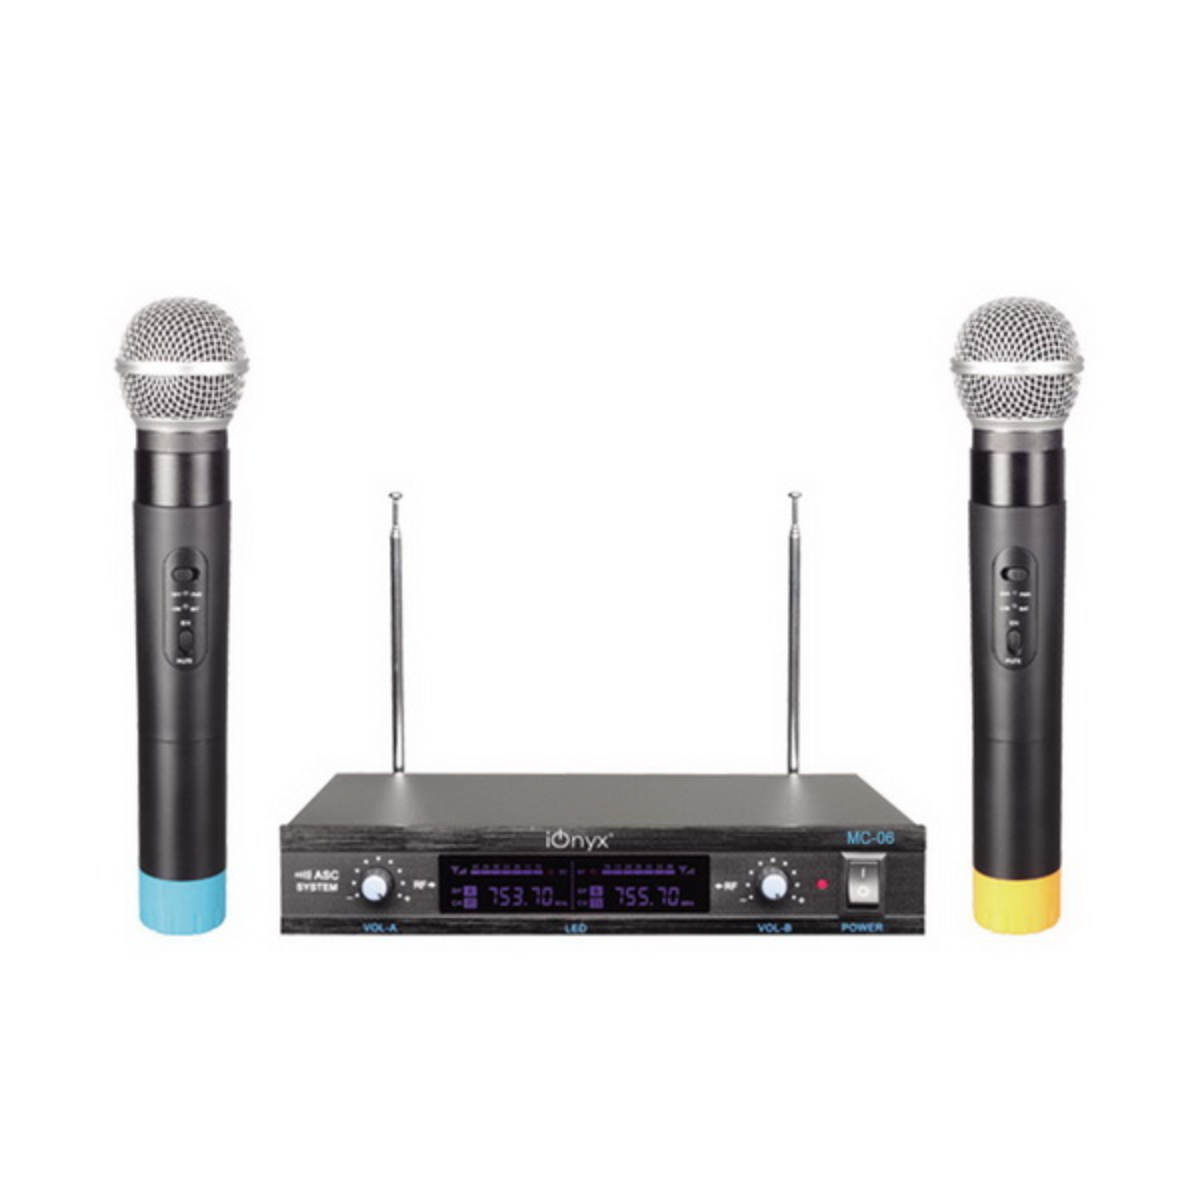 IONYX Wireless Microphone (Black) MC-06